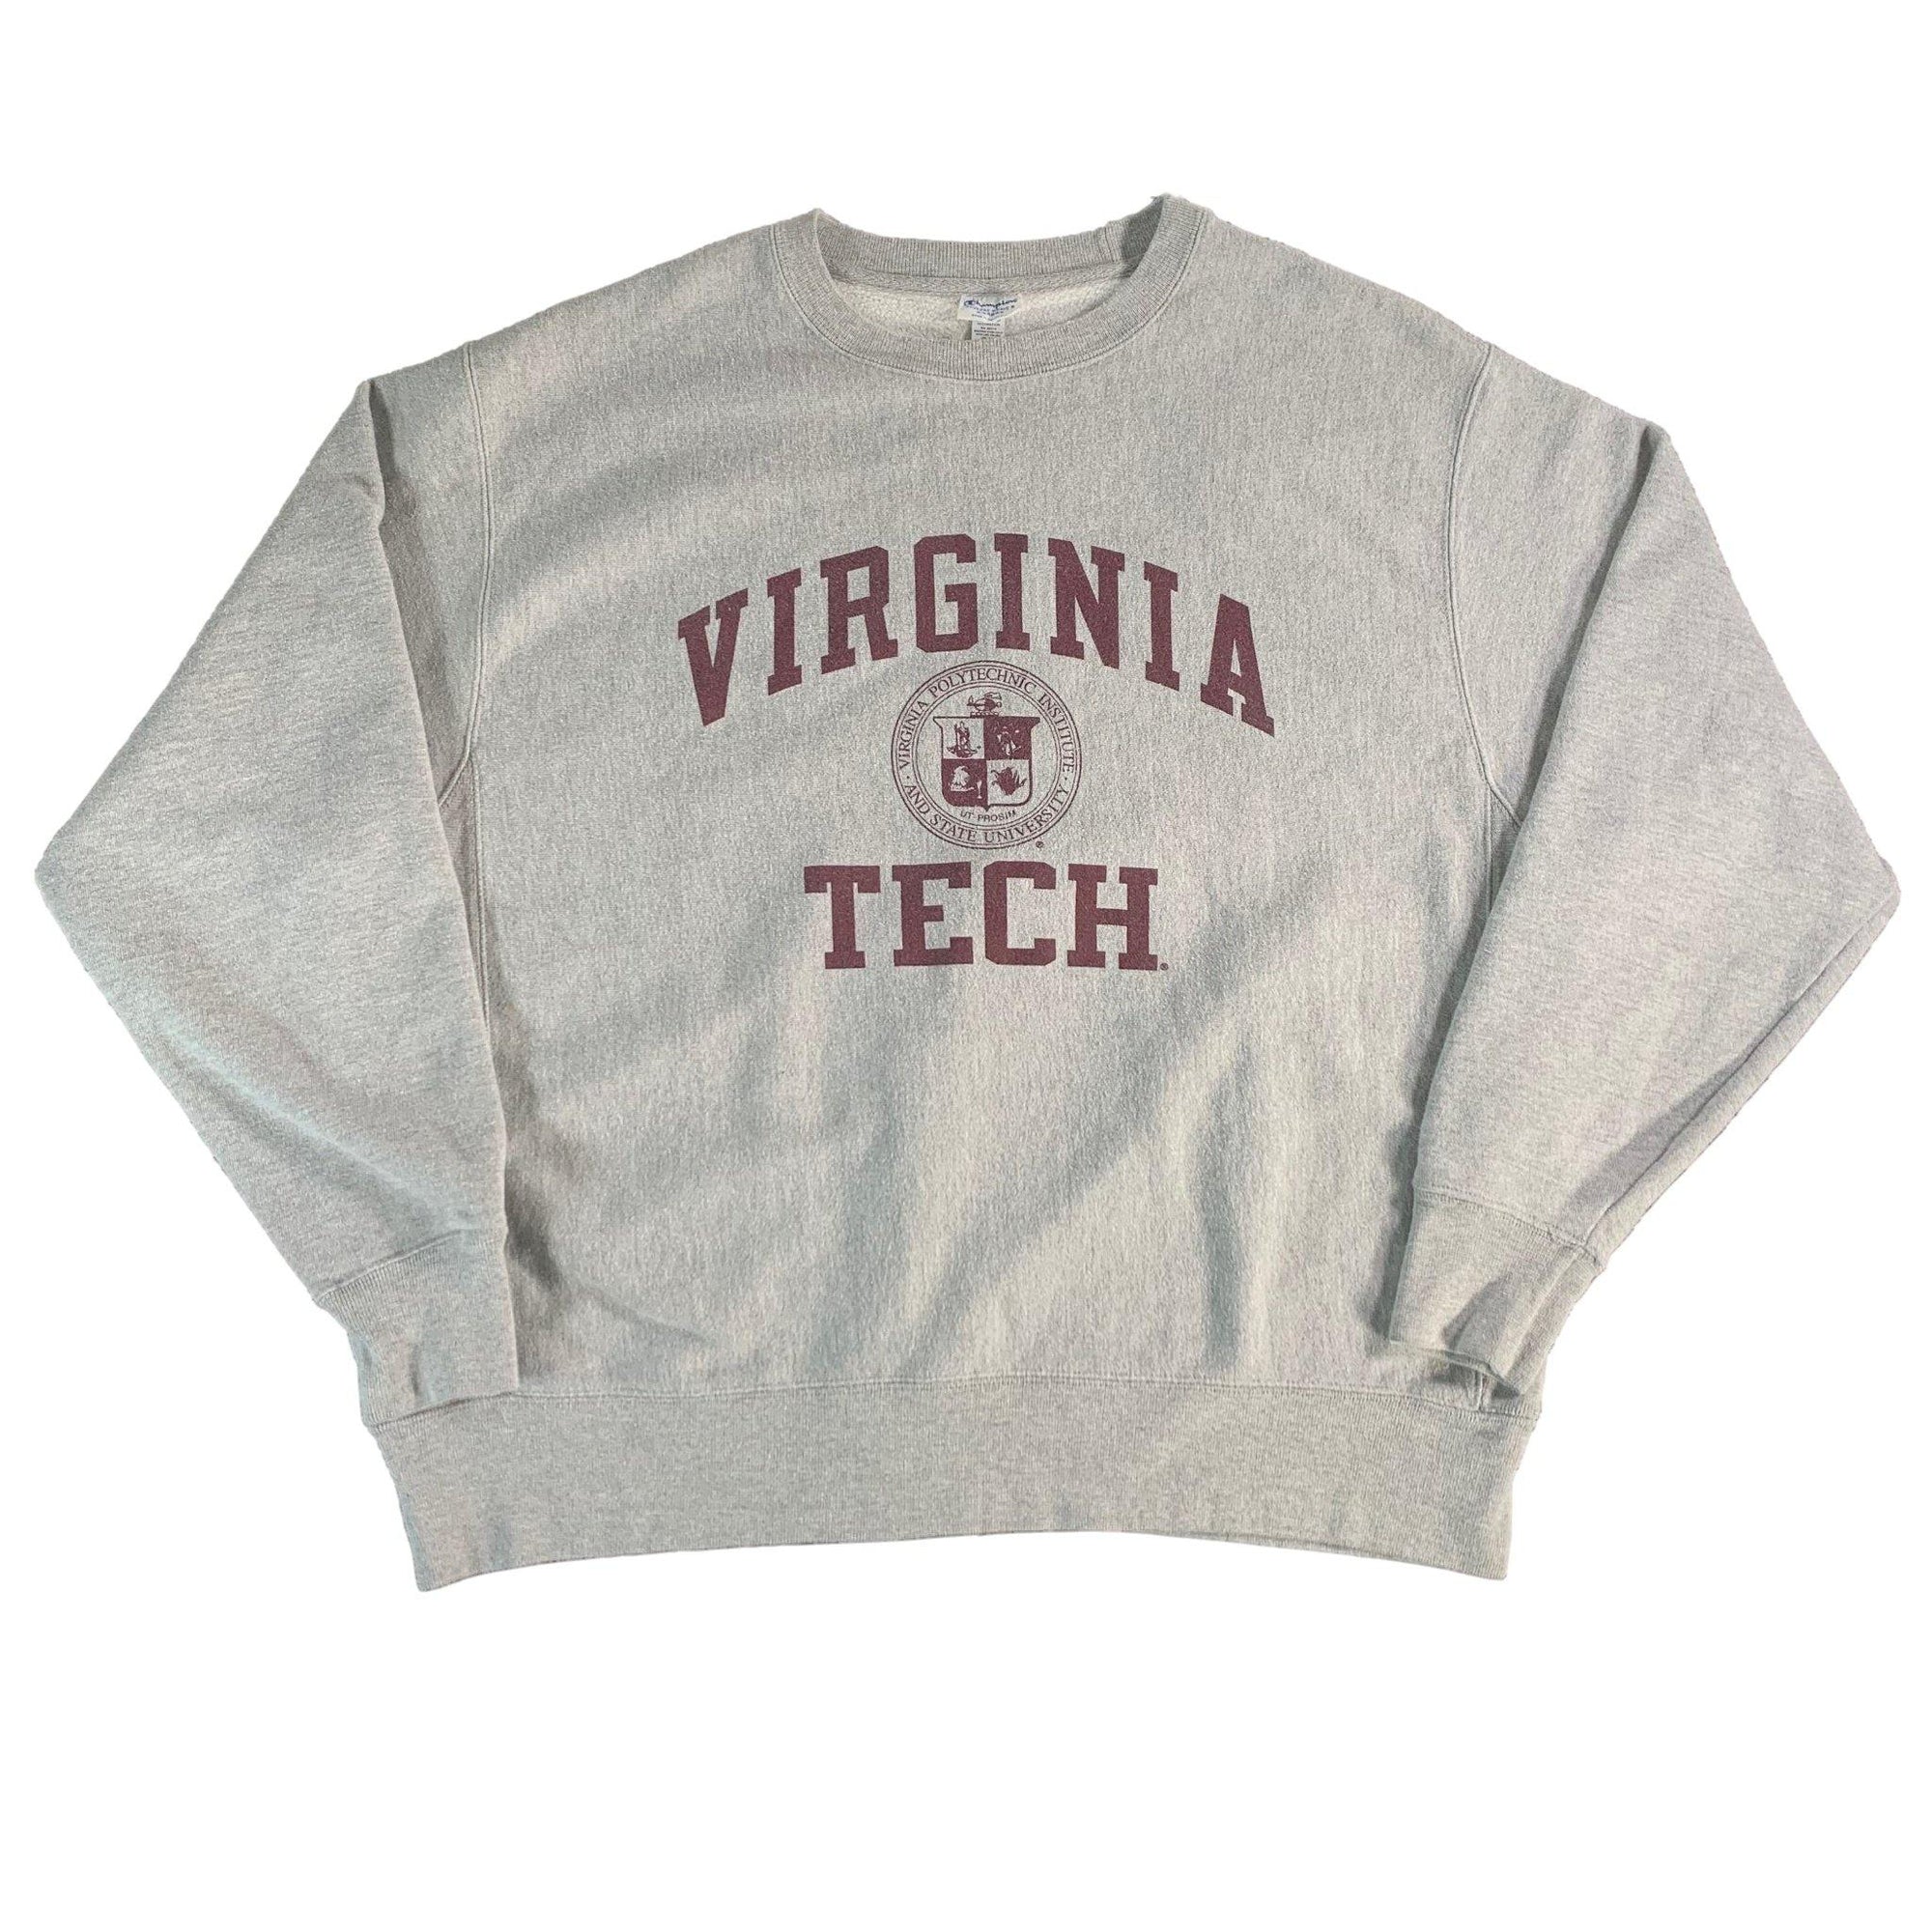 Vintage Champion Reverse Weave "Virginia Tech" Crewneck Sweatshirt - jointcustodydc